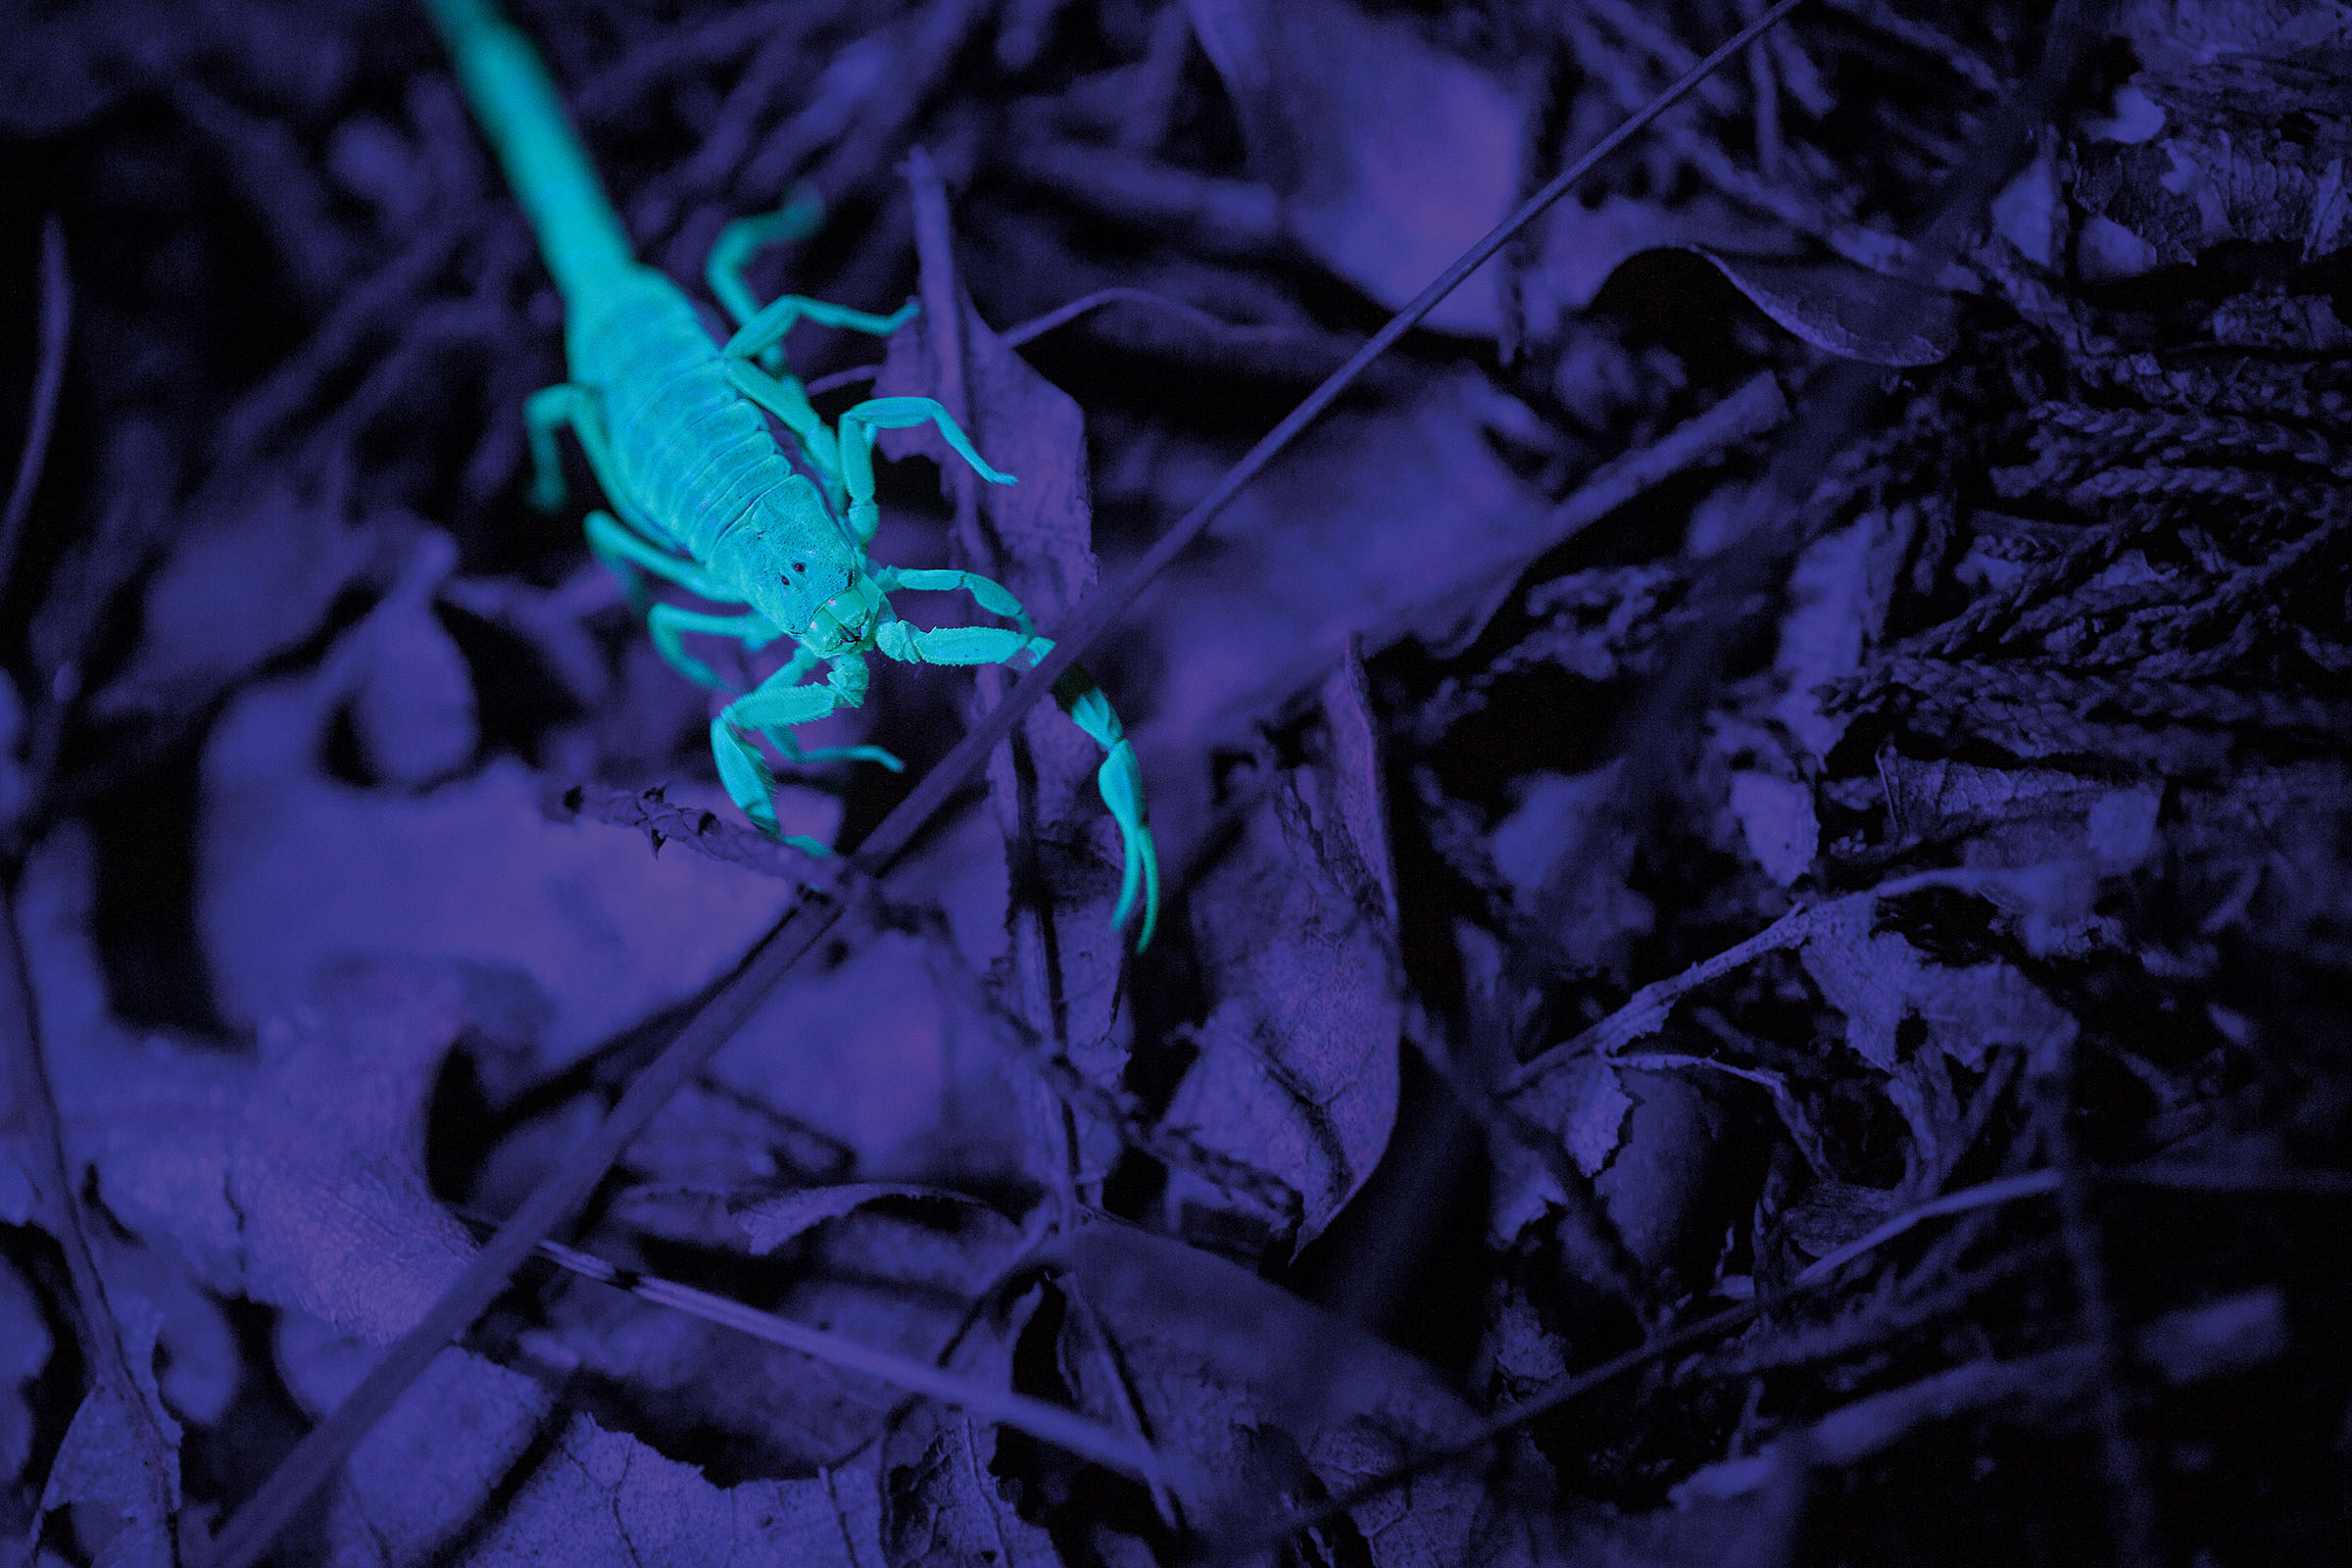 A scorpion glows bright blue on a dark blue/purple background outdoors